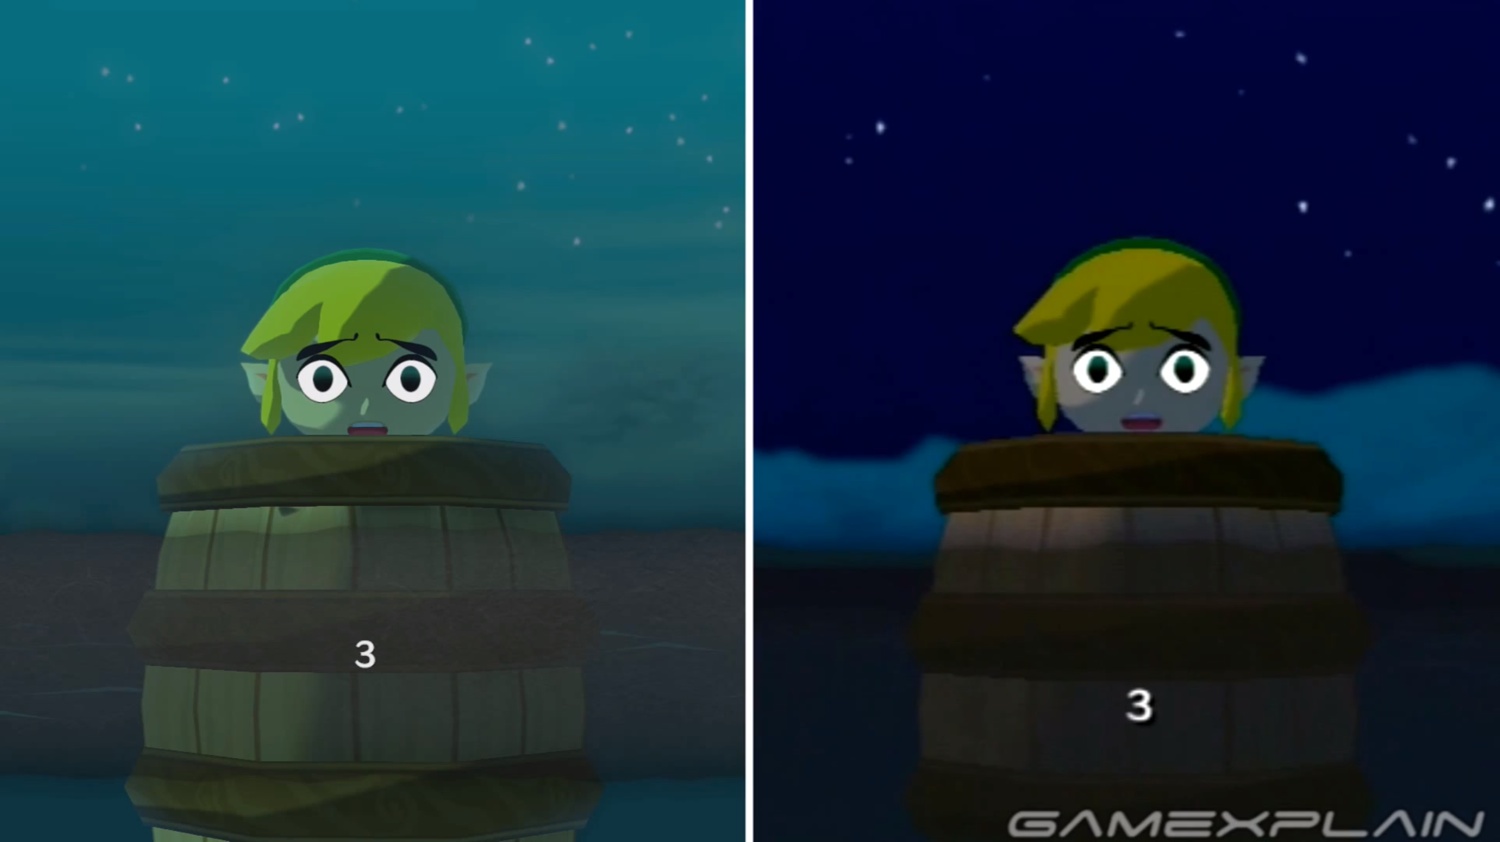 The Legend of Zelda: Wind Waker - GC Vs. Wii U comparison video